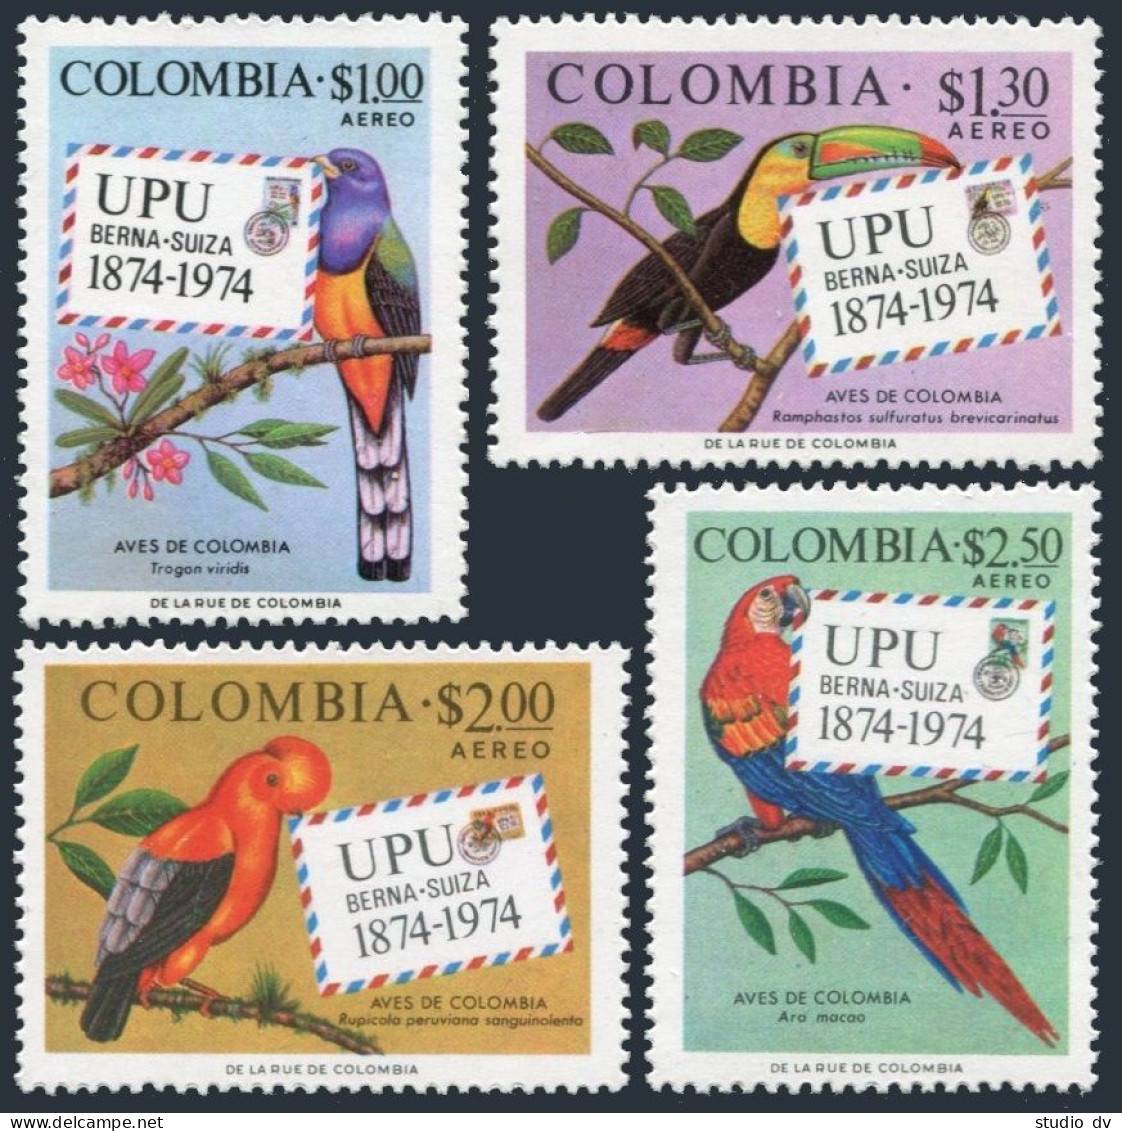 Colombia C611-C614, MNH. Michel 1275-1278. UPU-100, 1984. Parrot. - Colombie